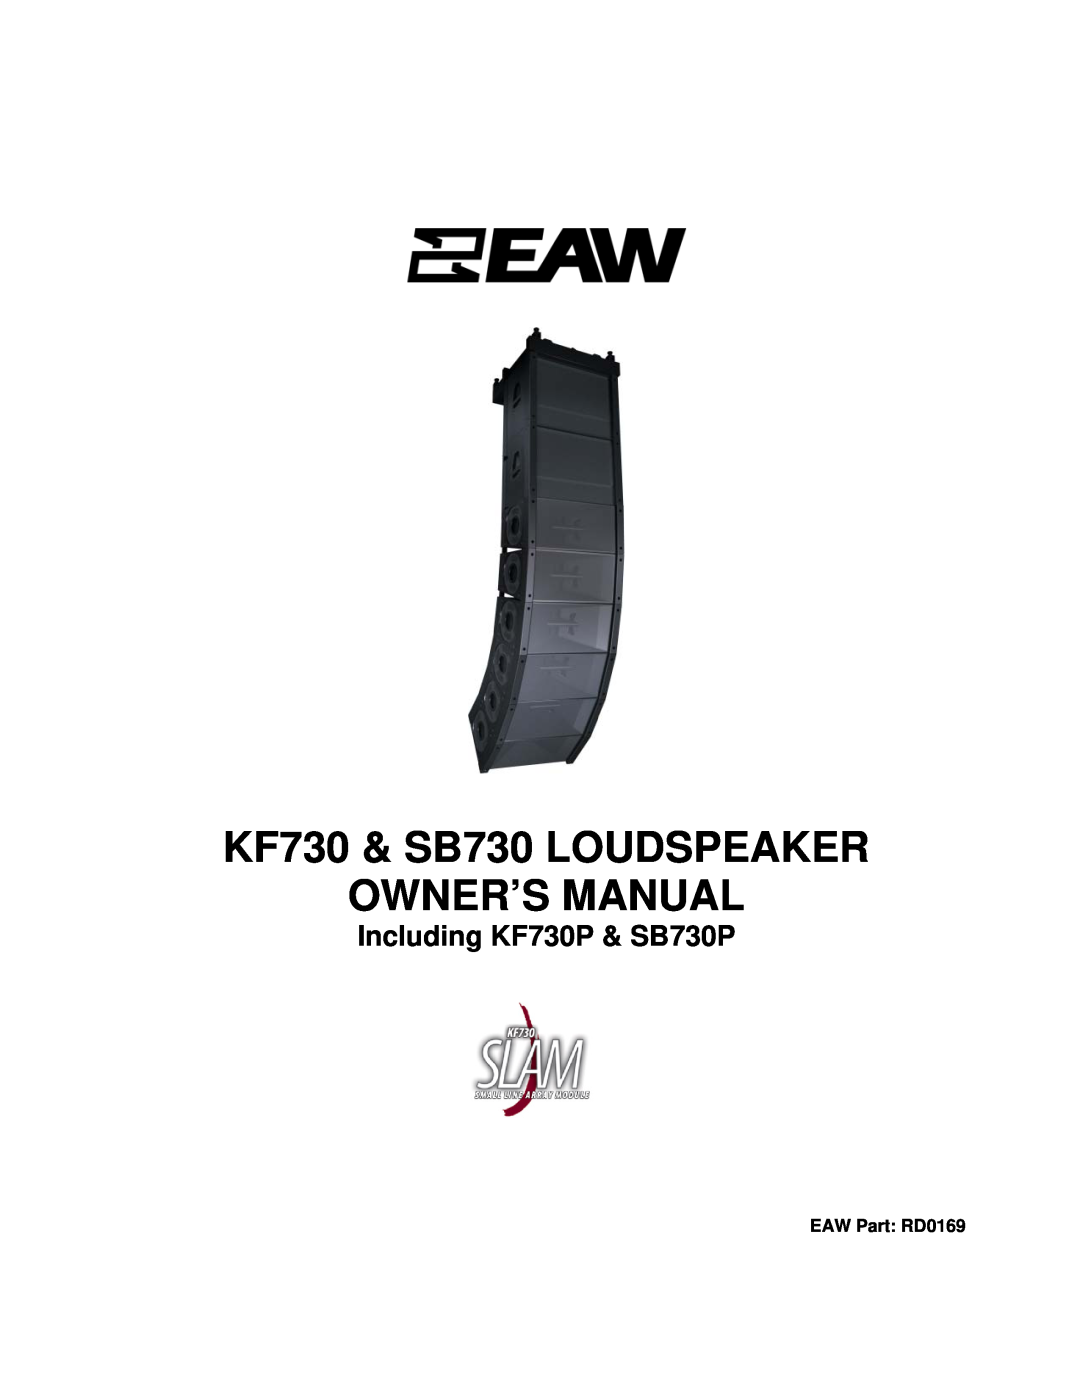 EAW owner manual EAW Part RD0169, Including KF730P & SB730P 